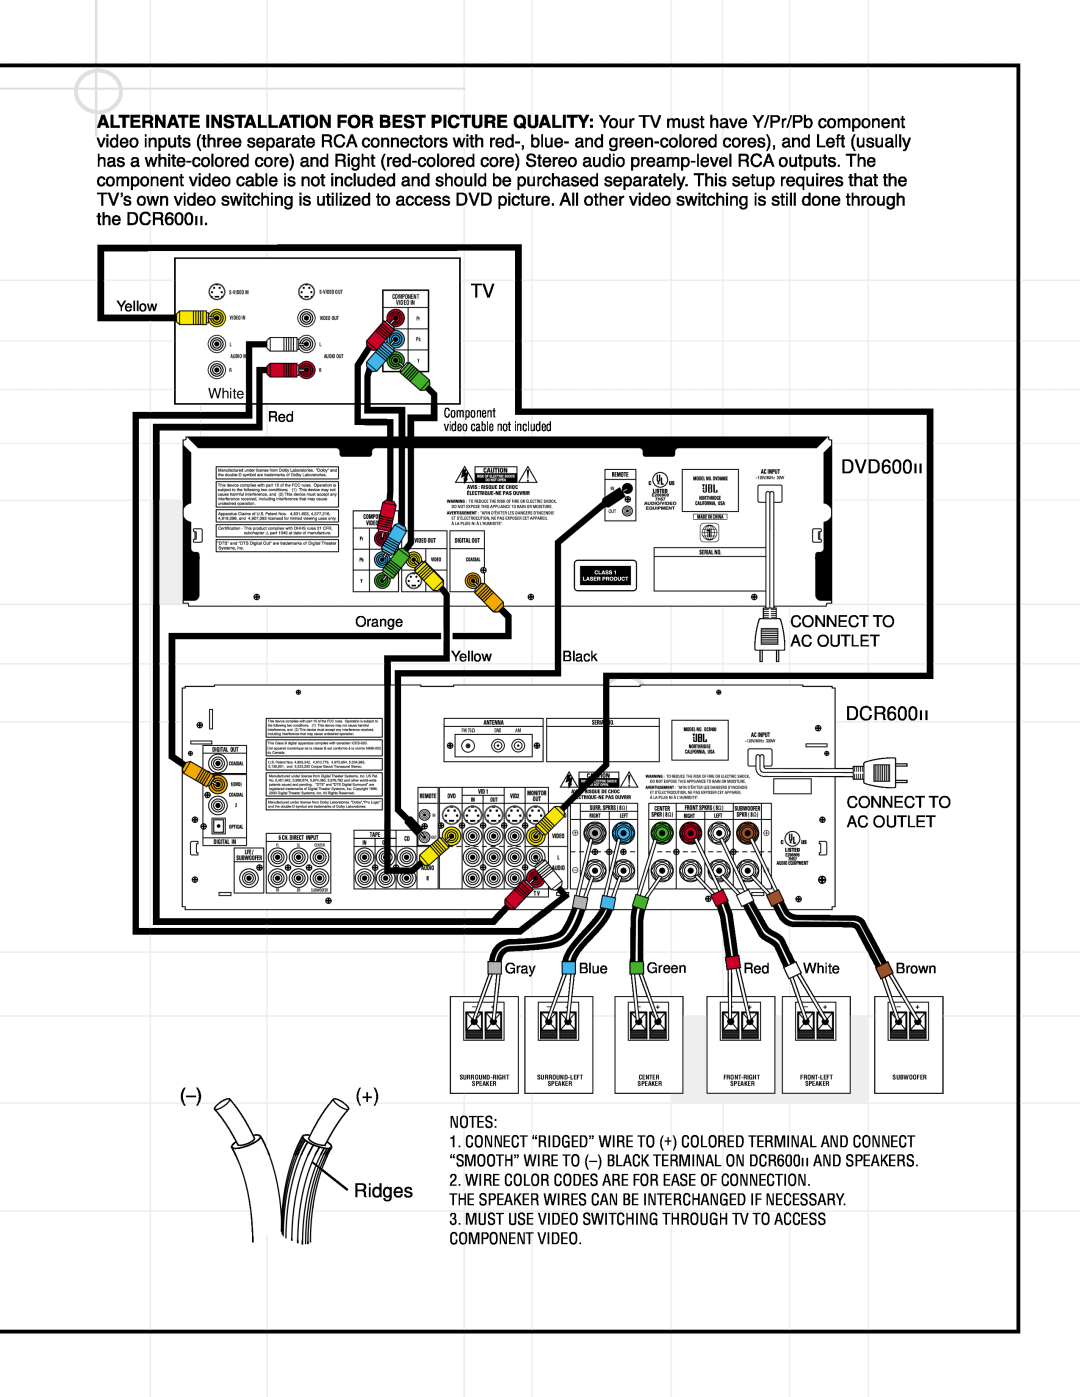 JBL setup guide Connect To, DVD600II, DCR600II, Ridges 